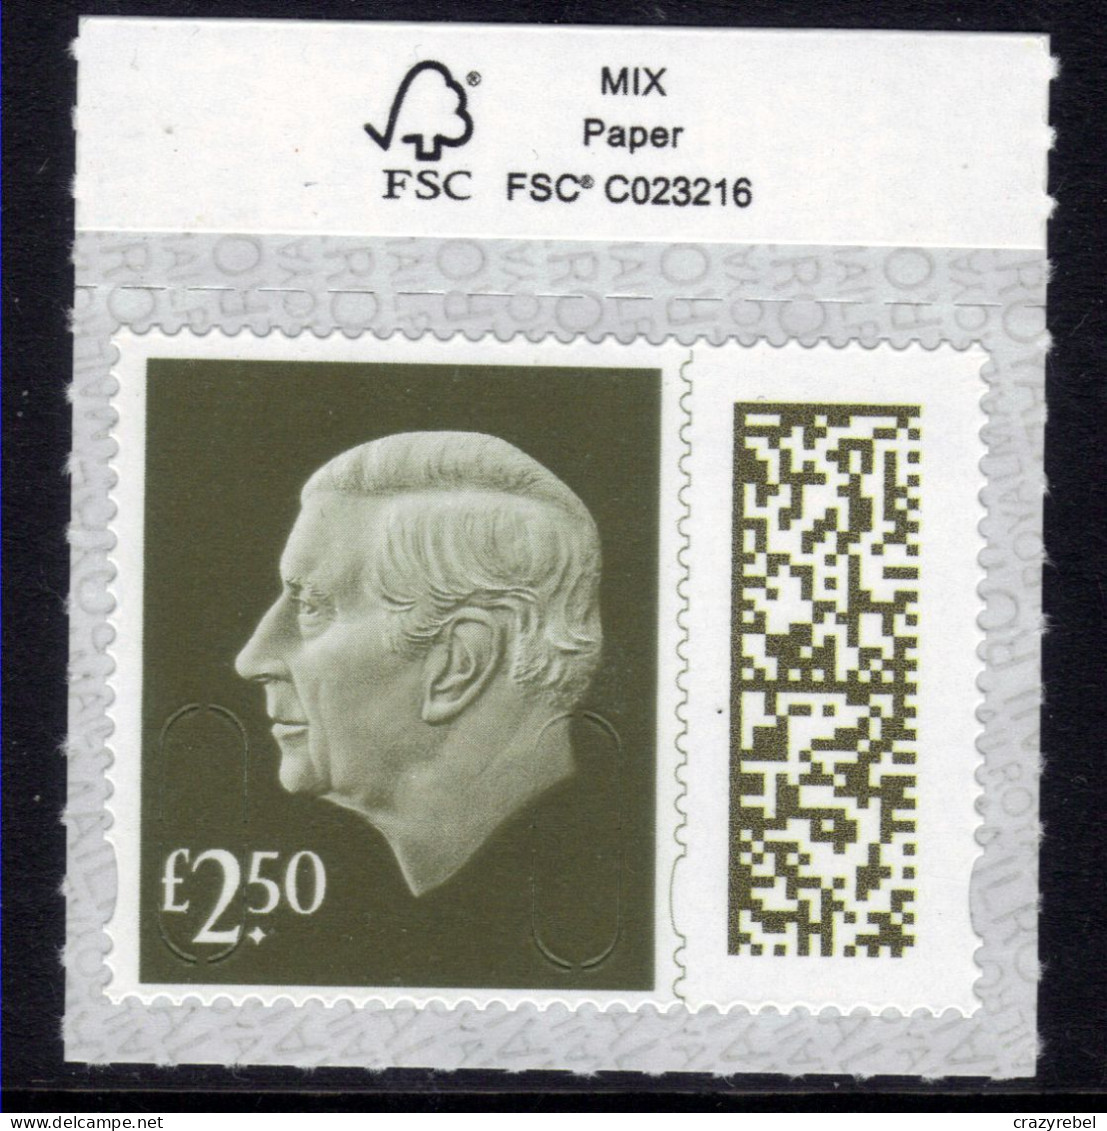 GB 2024 KC 3rd £2.50 Gooseberry Green Machin Umm SG V5026 ( G1421 ) - Unused Stamps